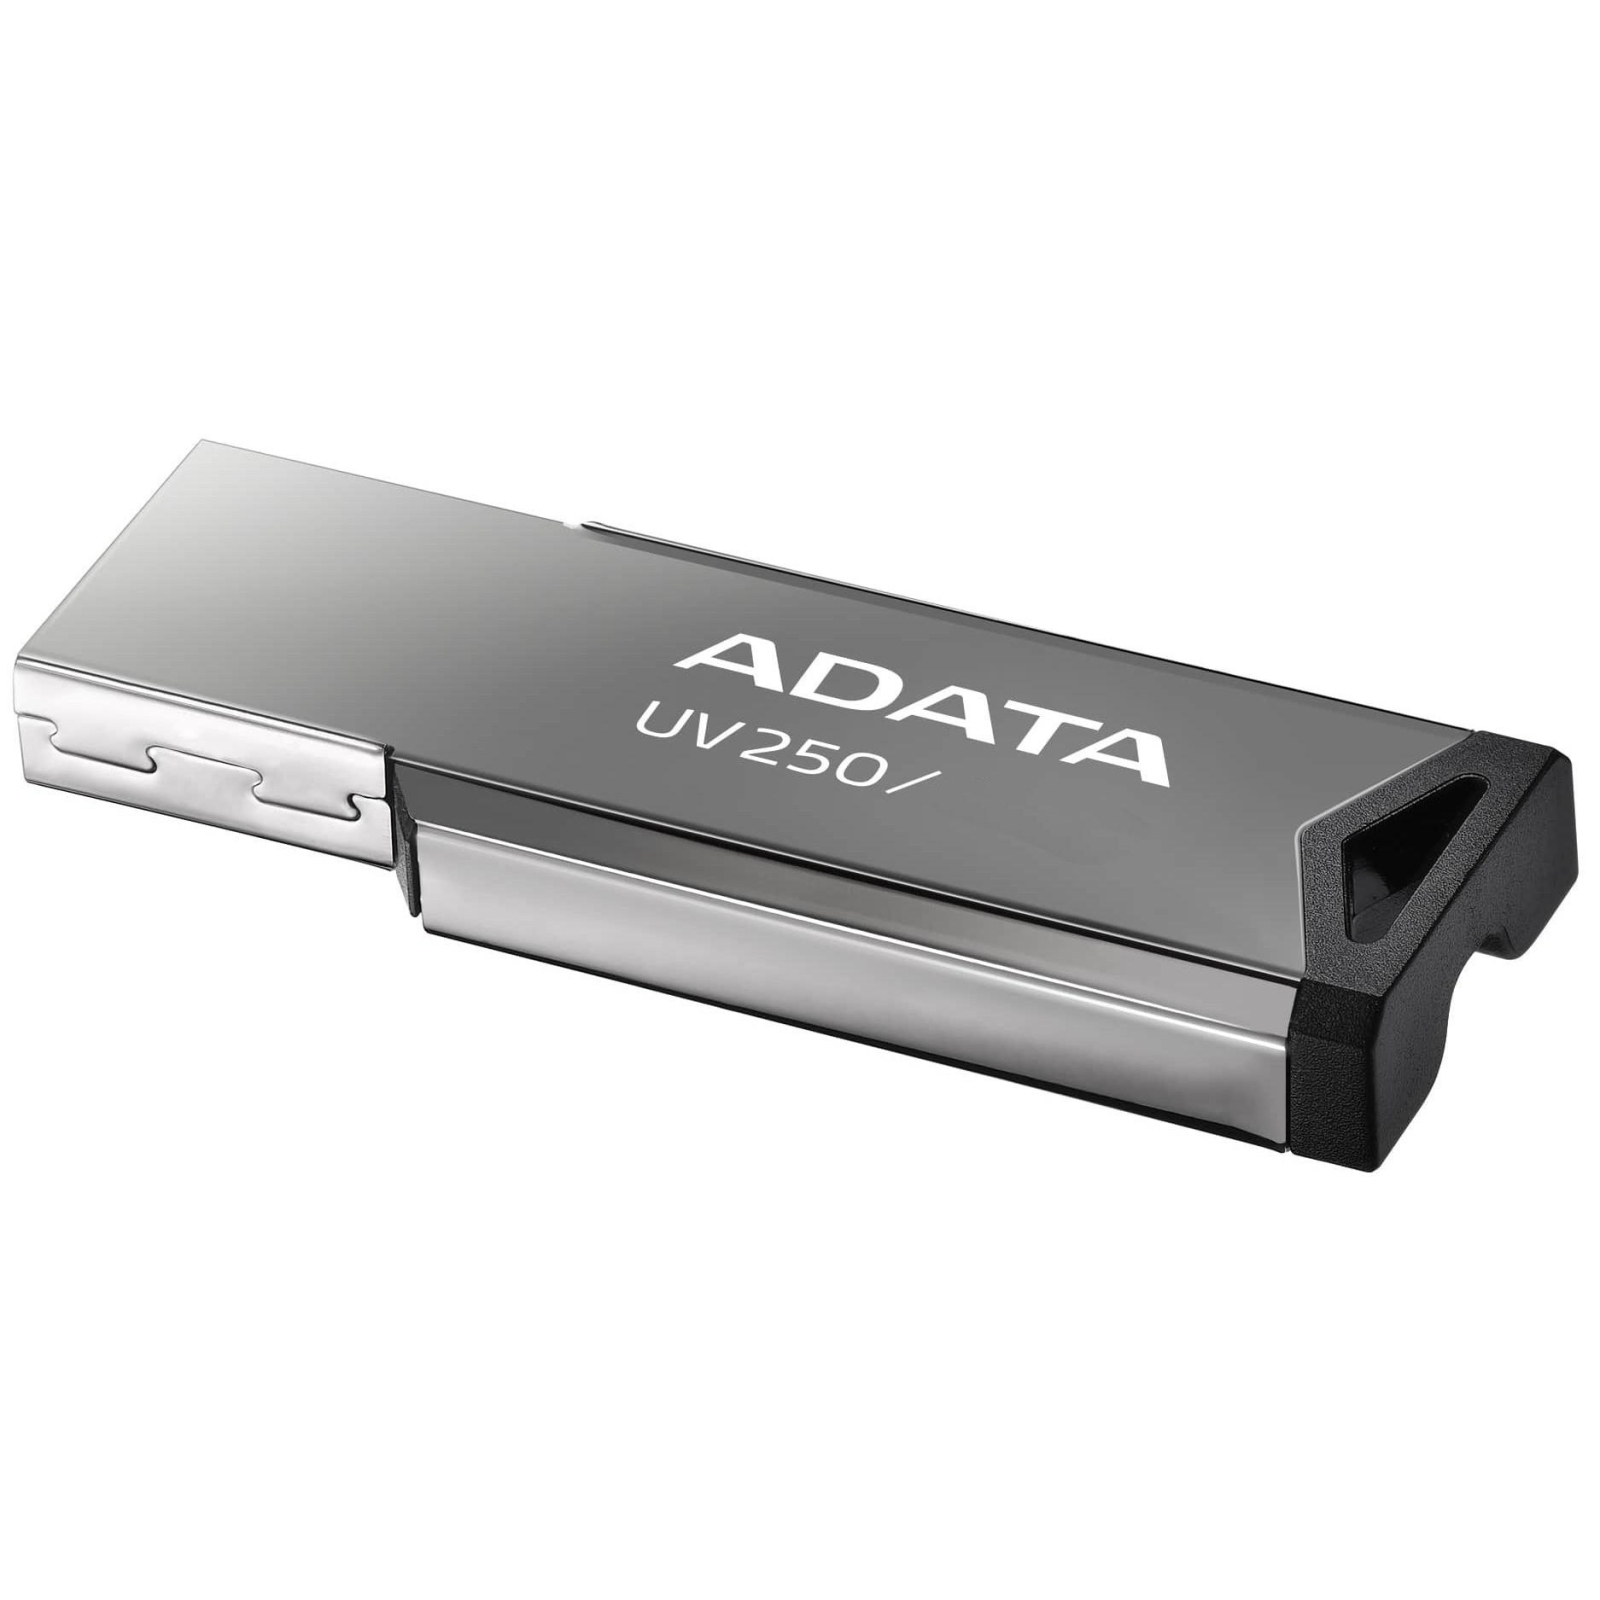 USB флеш накопитель ADATA 16GB AUV 250 Silver USB 2.0 (AUV250-16G-RBK) изображение 2